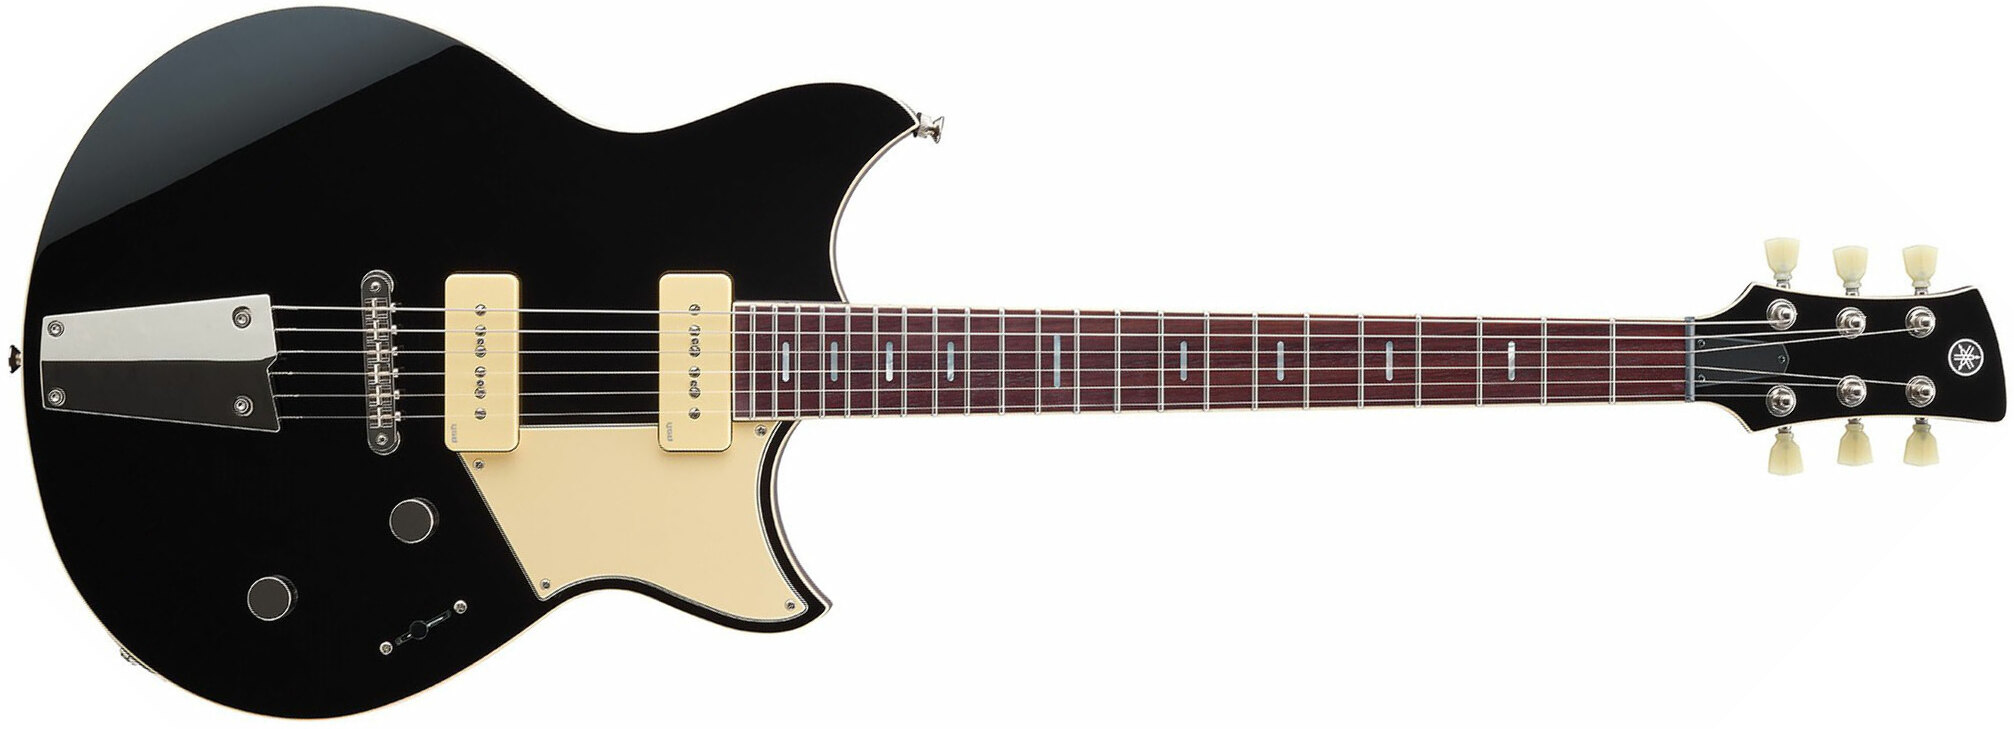 Yamaha Rss02t Revstar Standard 2p90 Ht Rw - Black - Double cut electric guitar - Main picture